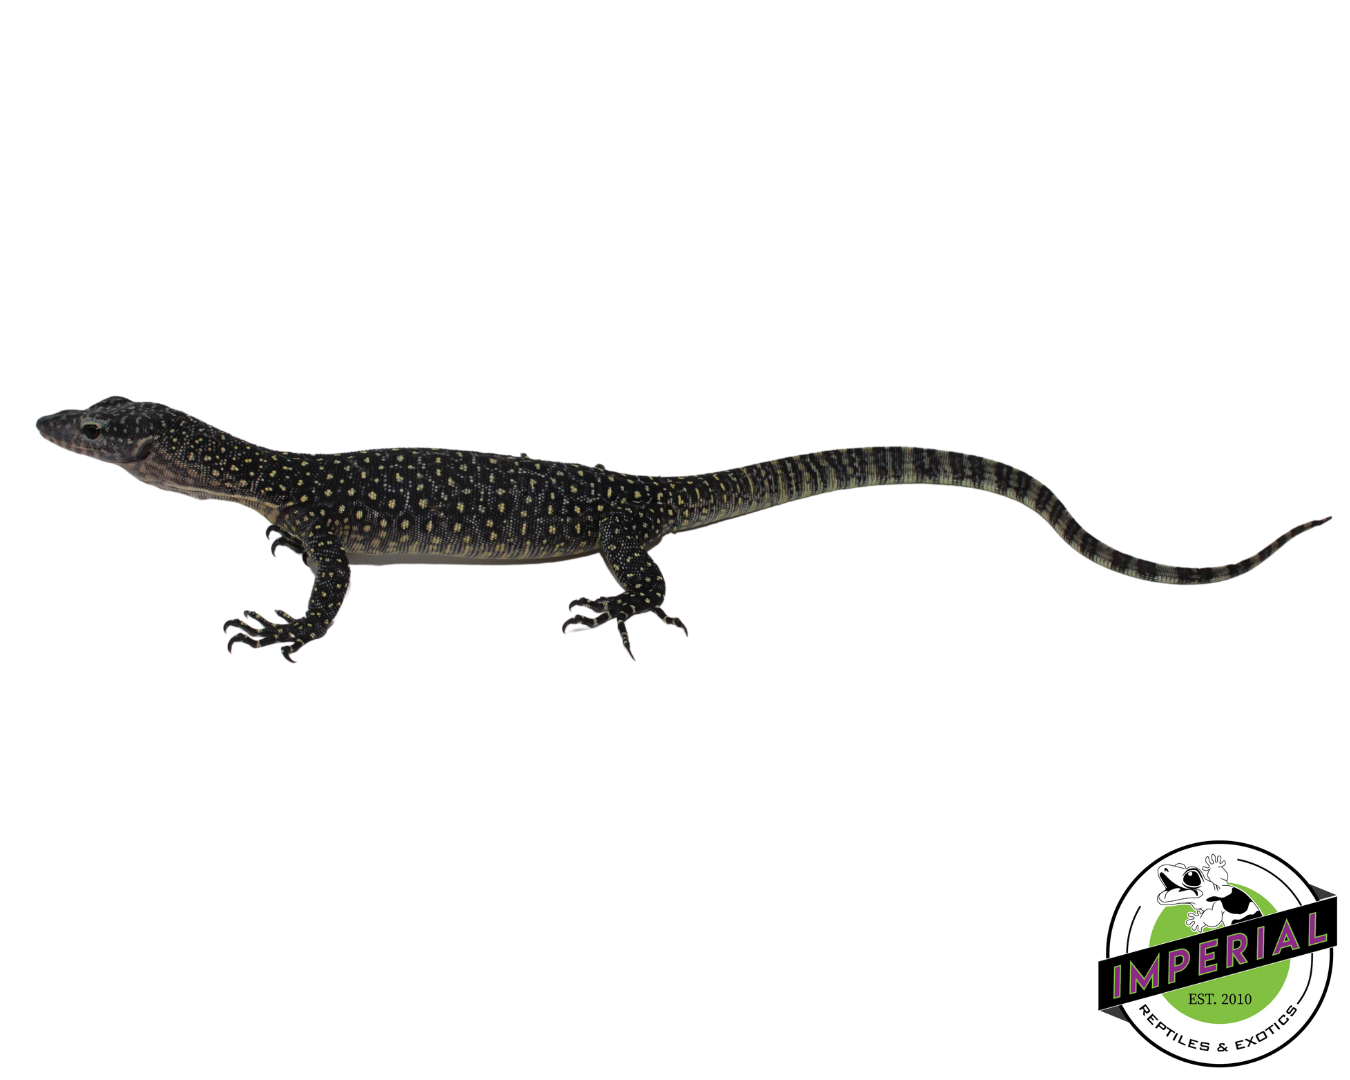 sorong mangrove monitor lizard for sale, buy reptiles online